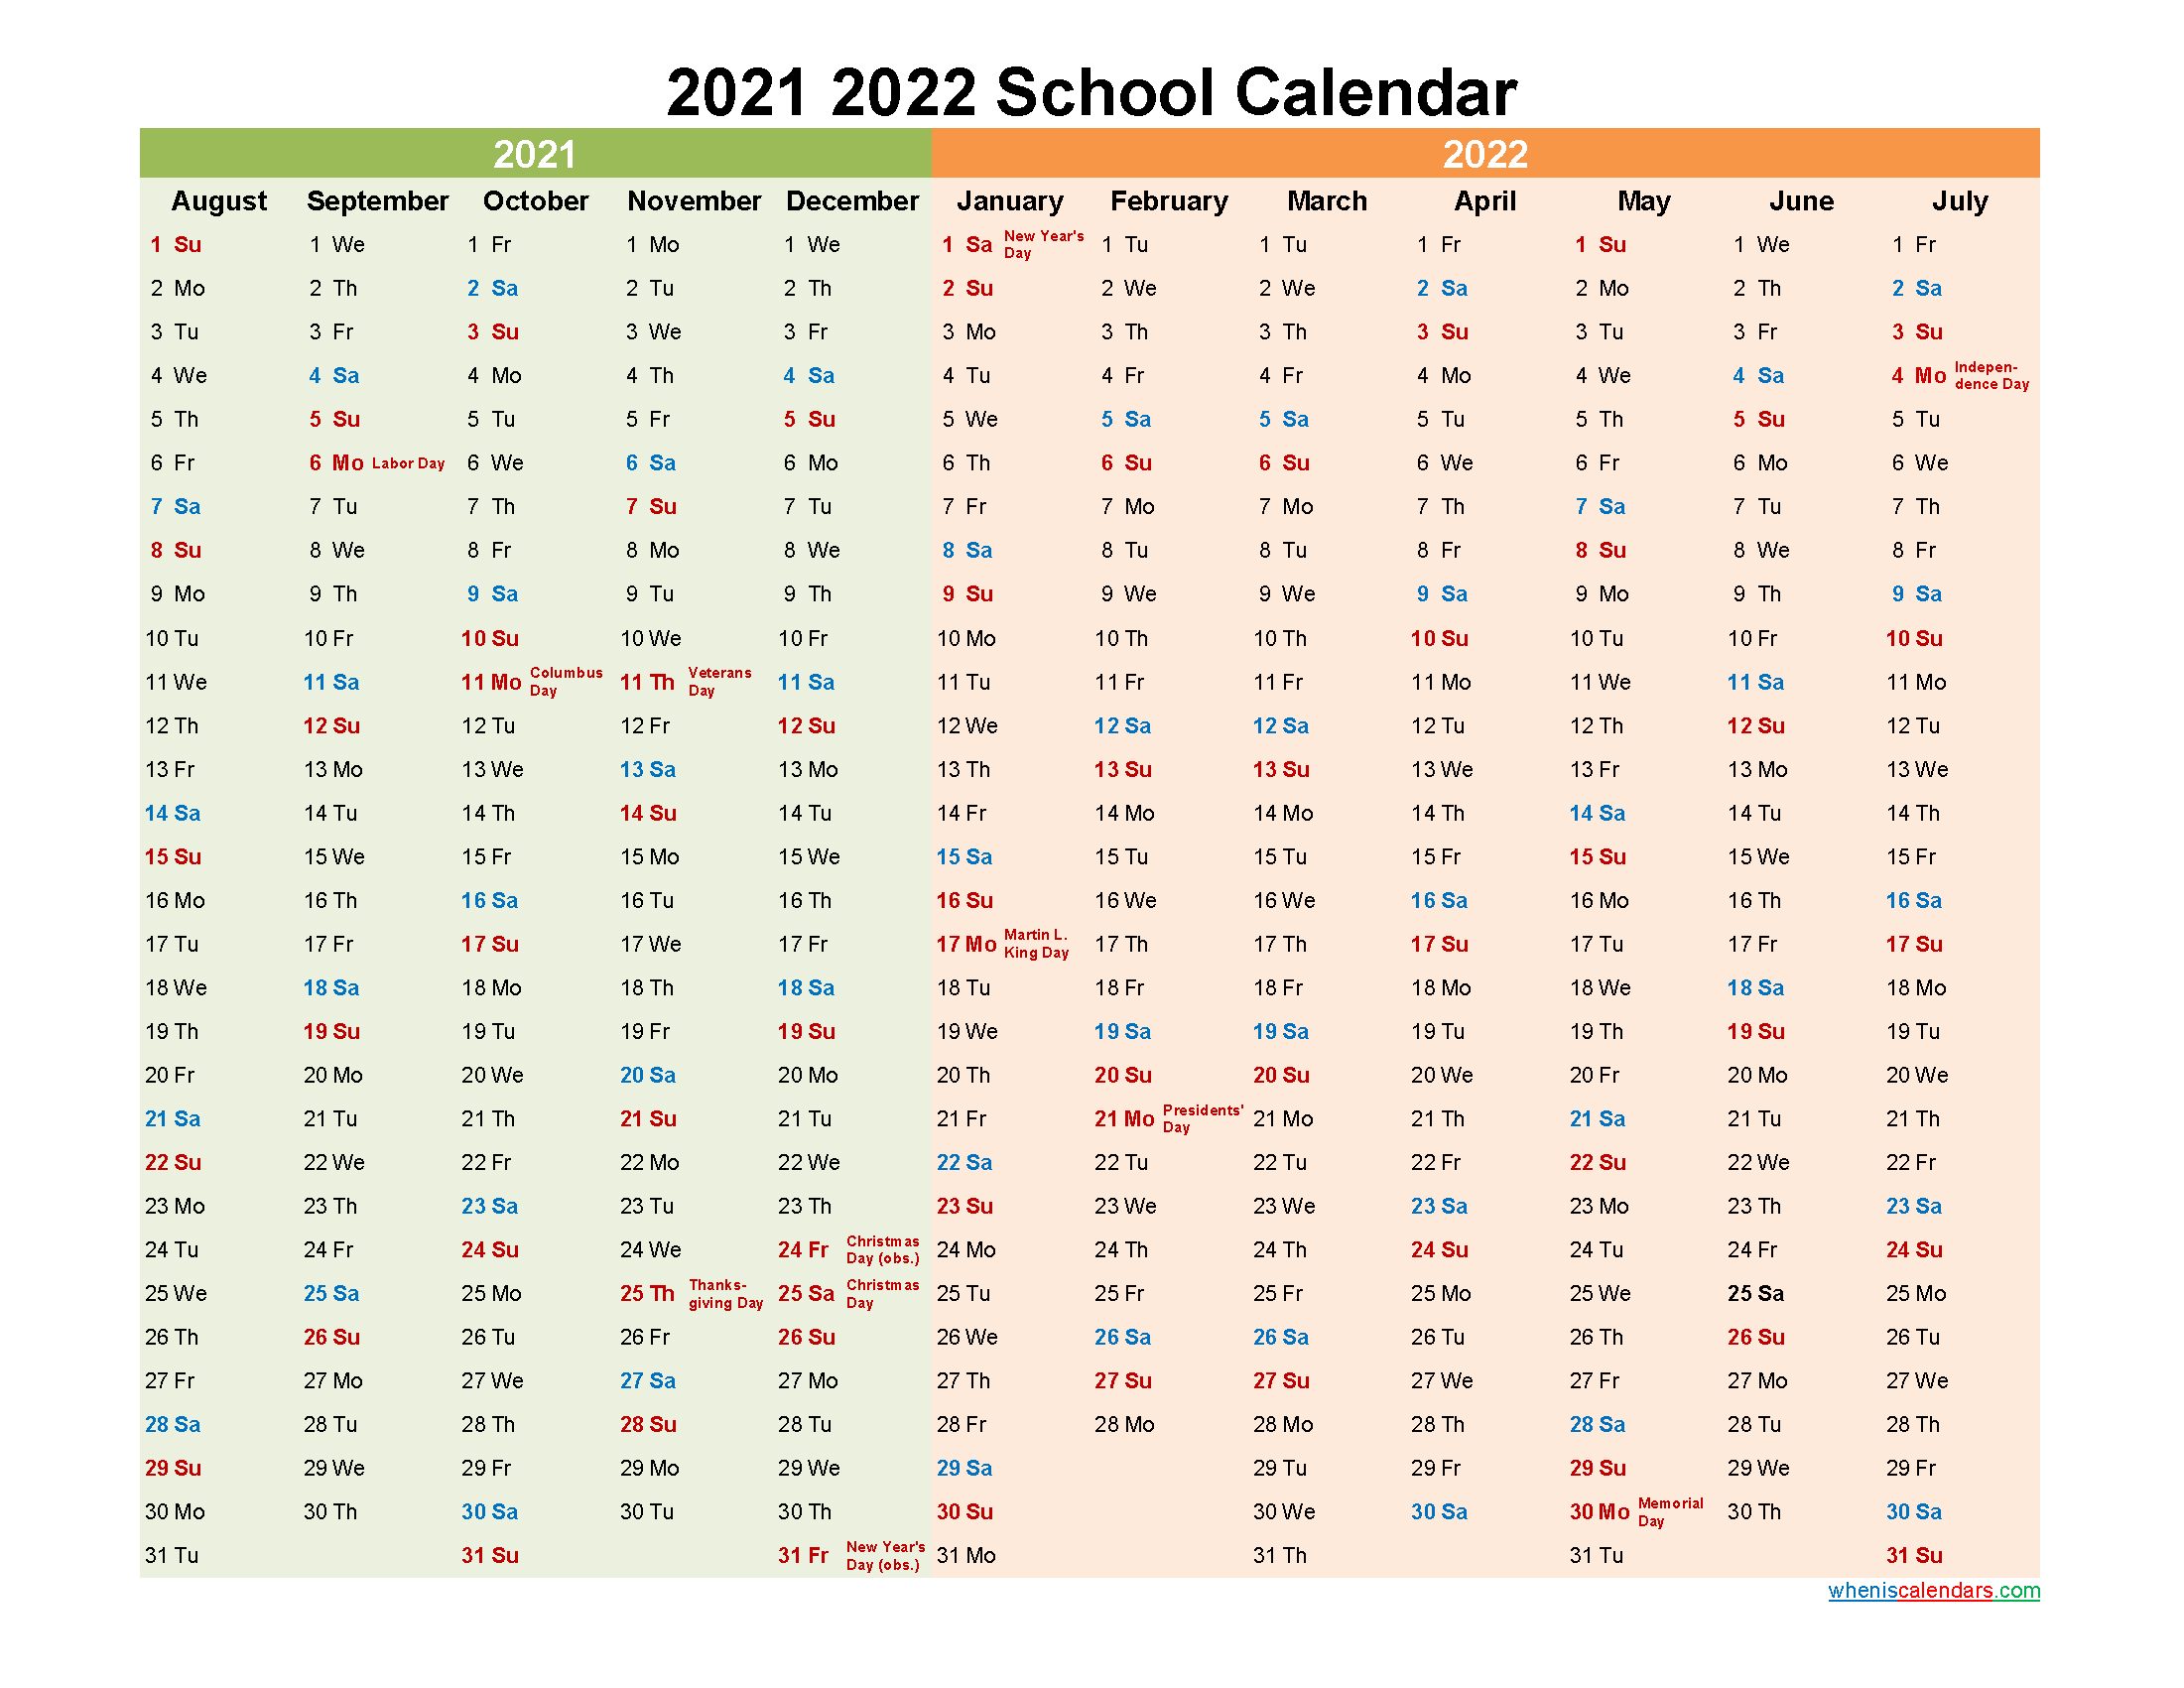 2021 and 2022 School Calendar Printable - Template No.22scl48